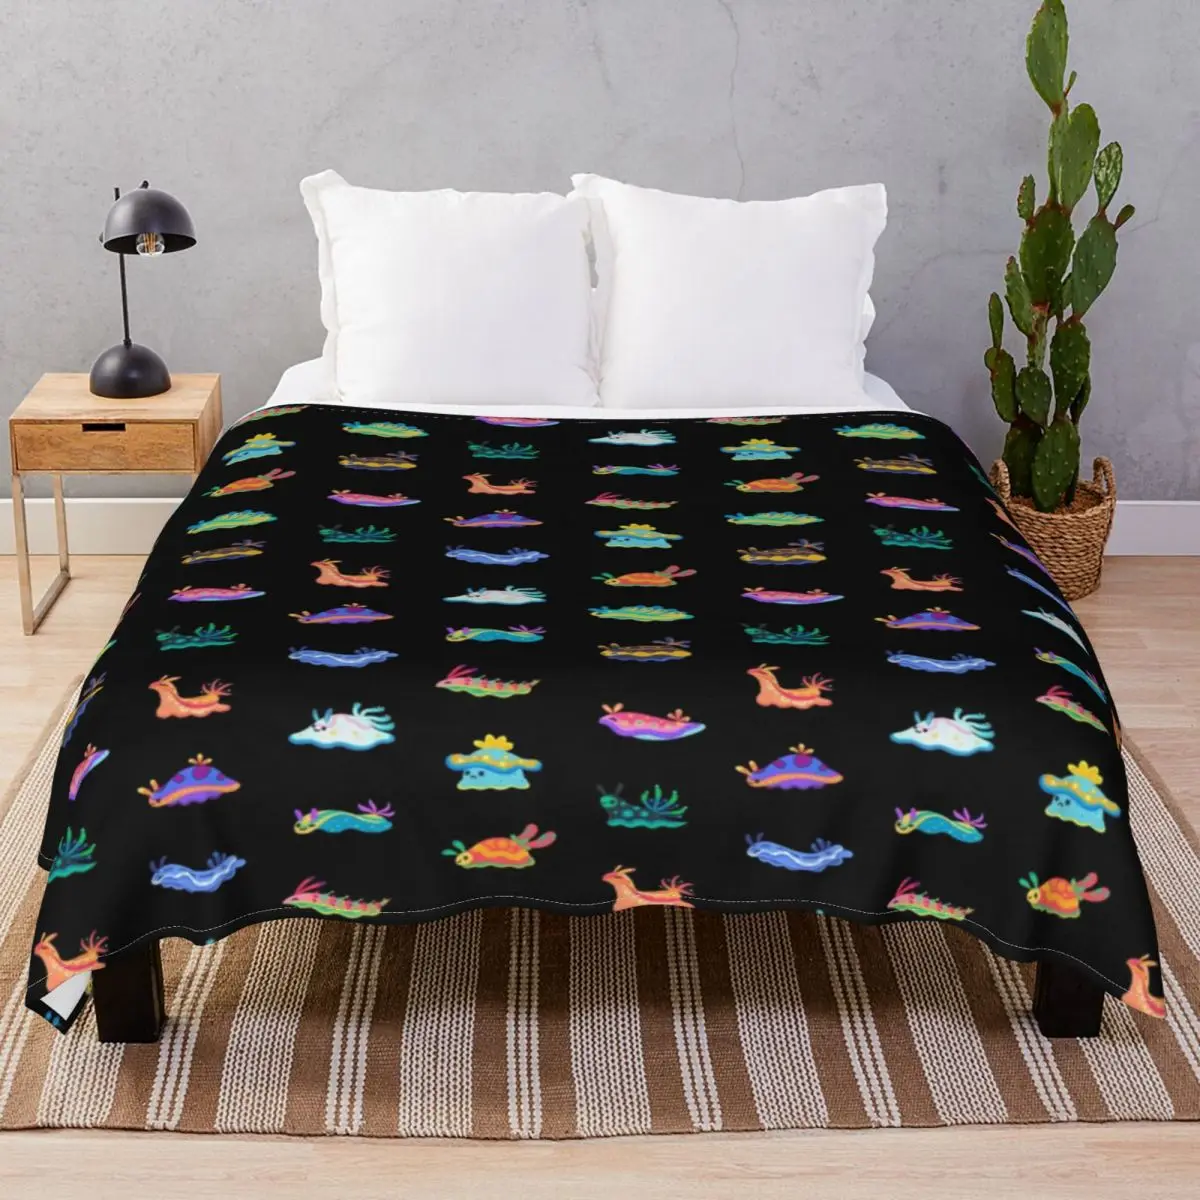 Sea Slug Black Blankets Fleece Autumn/Winter Lightweight Throw Blanket for Bed Home Couch Travel Office